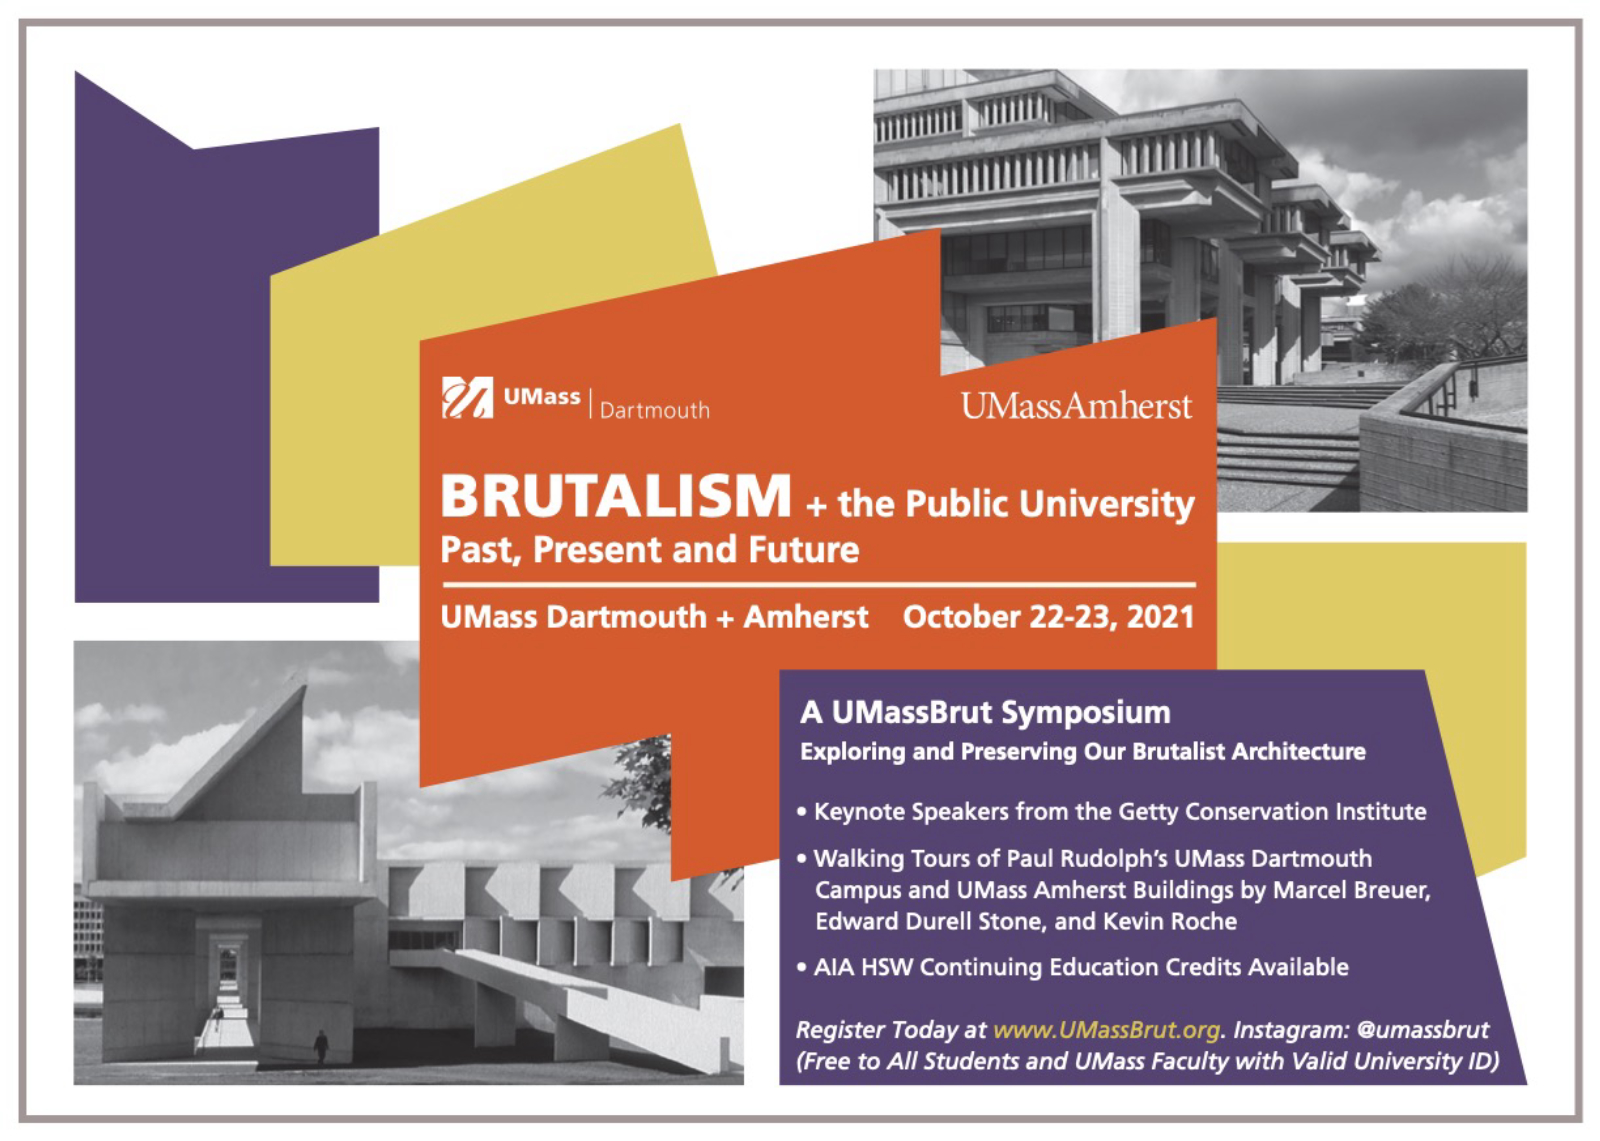 UMass BRUT symposium poster